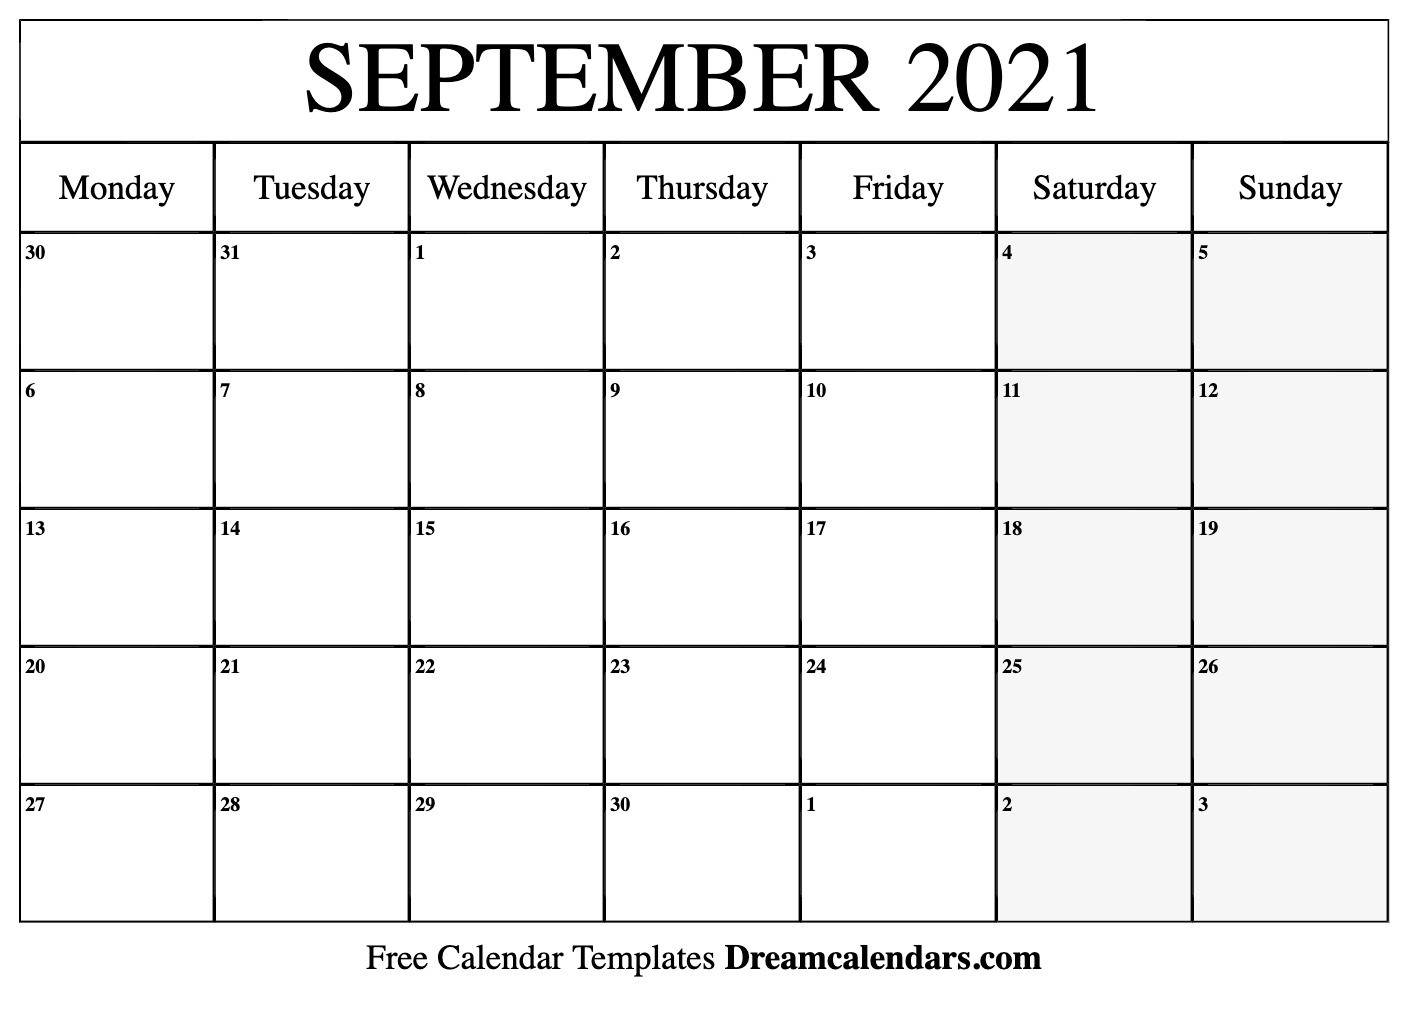 September 2021 Calendar | Free Blank Printable Templates-Free Printable Calendar 2021 September